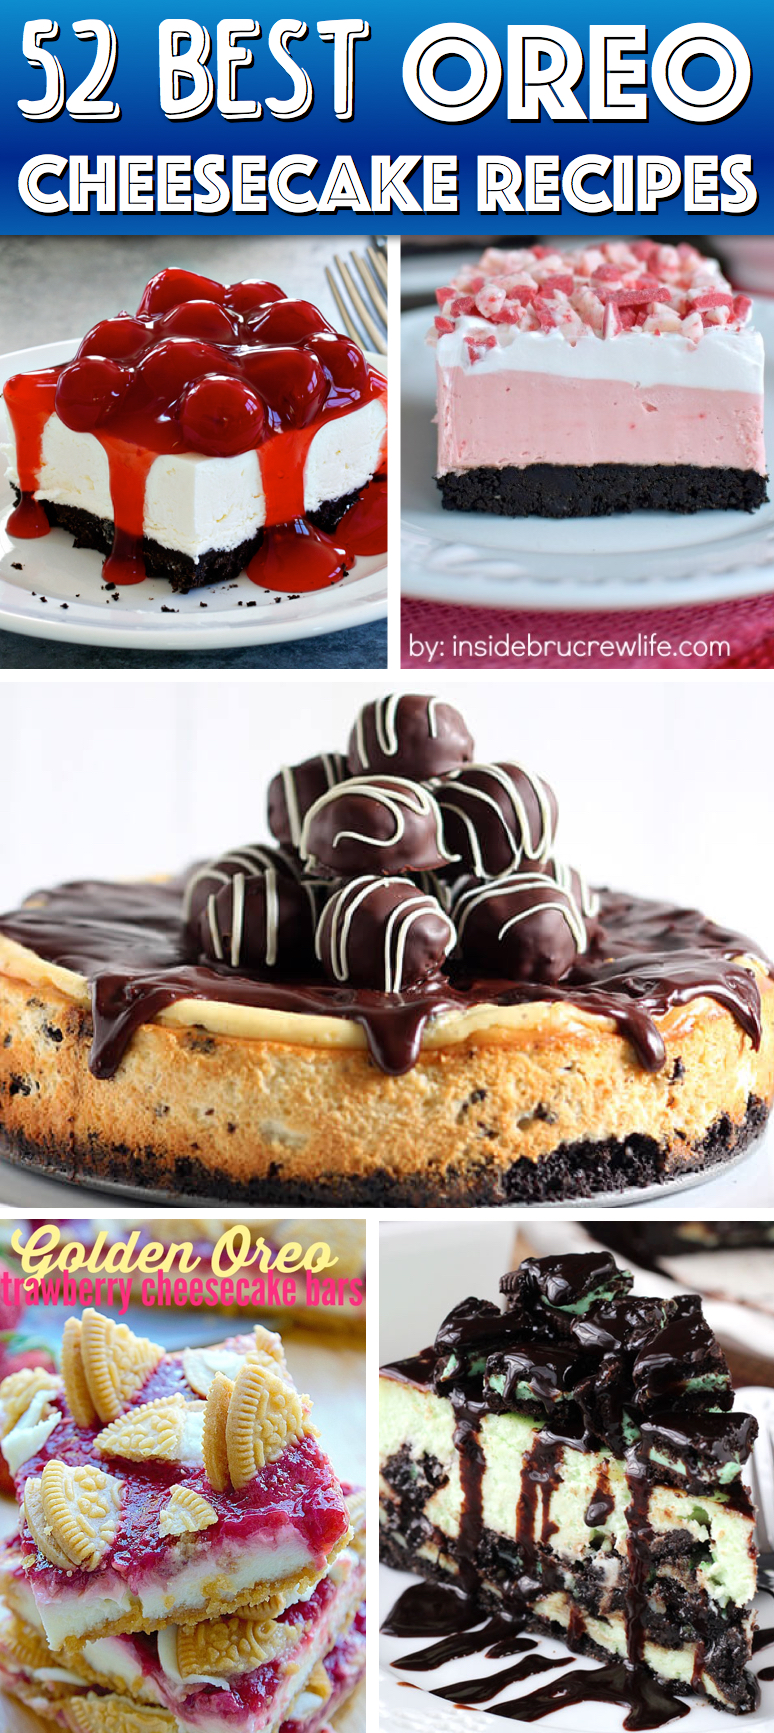 52 Best Oreo Cheesecake Recipes 